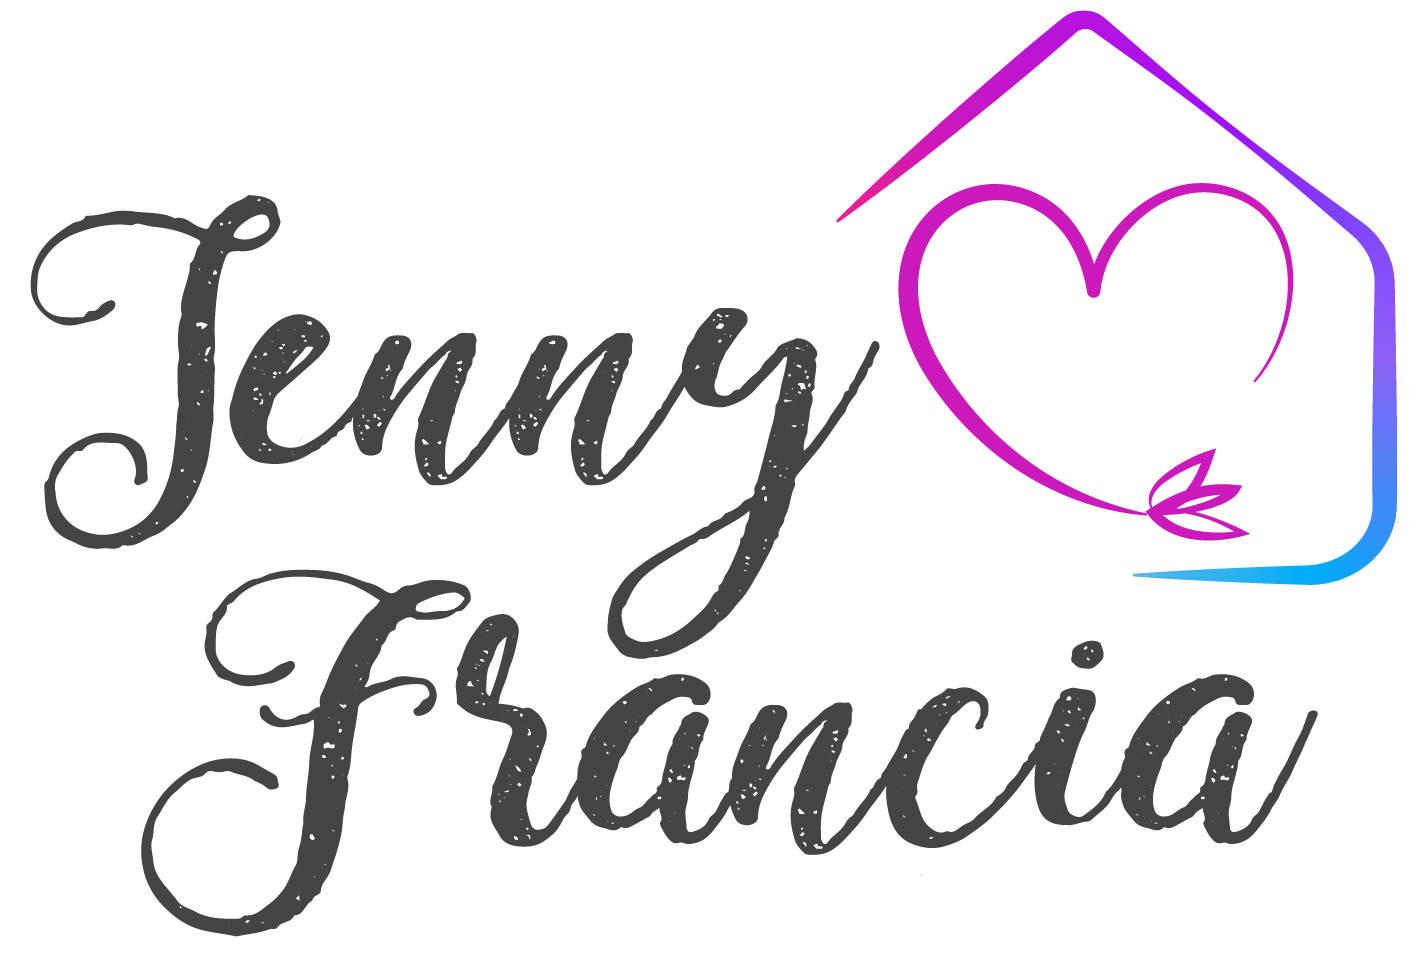 Jenny Francia – Mamãe Amélia